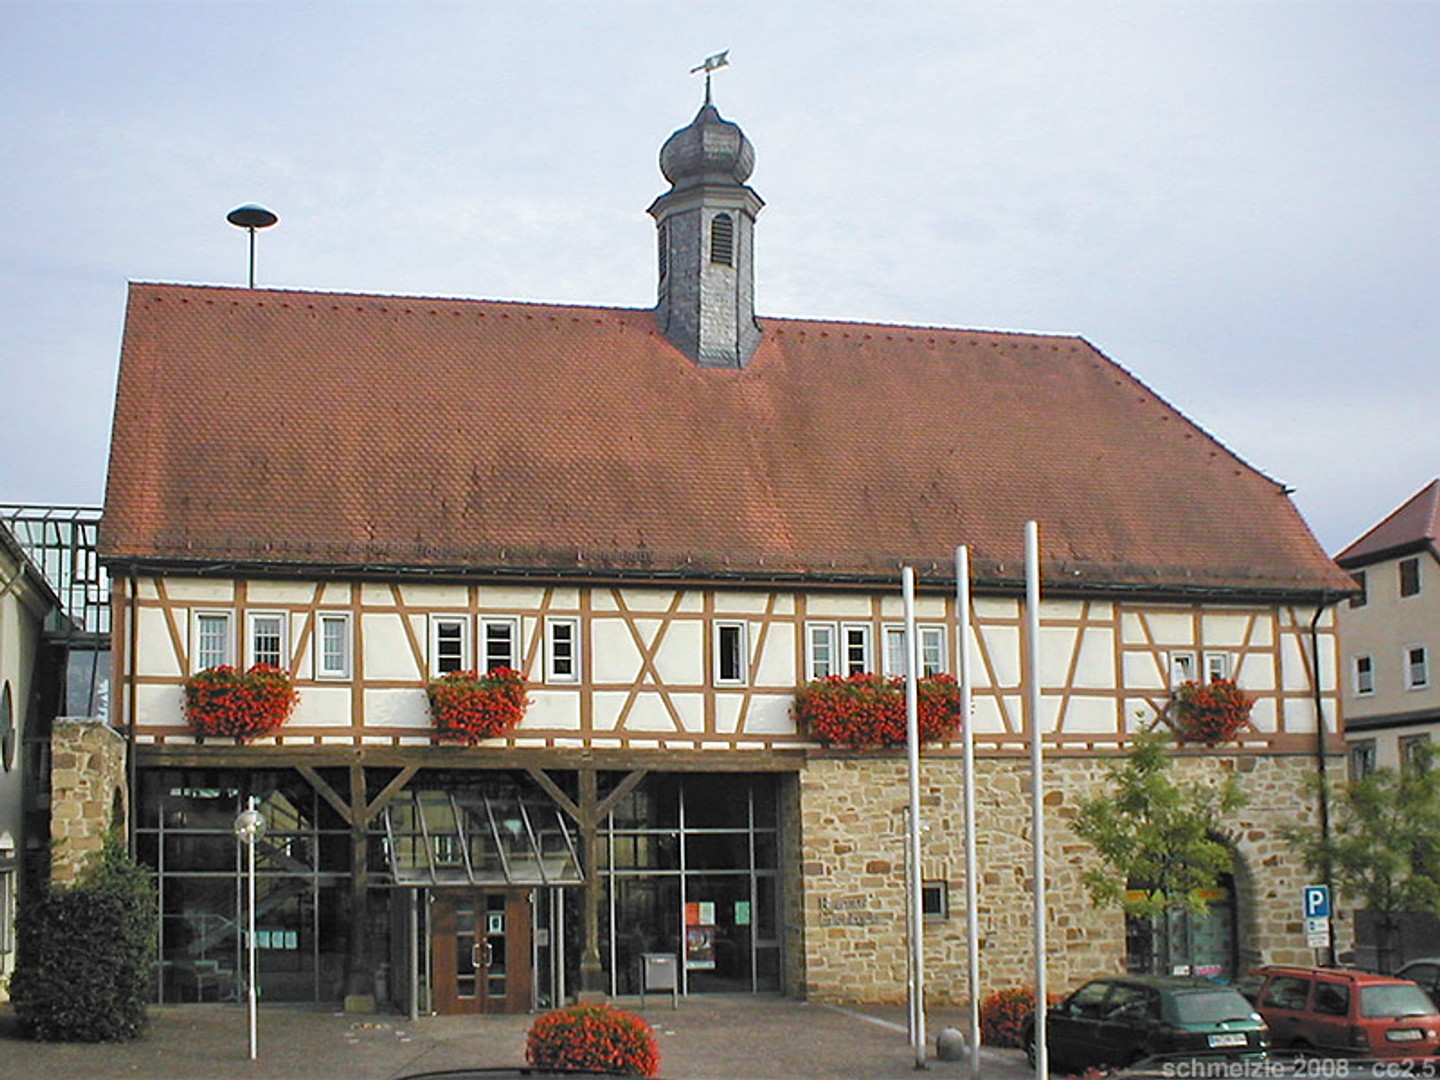 Rathaus-Erlenbach.jpg
				